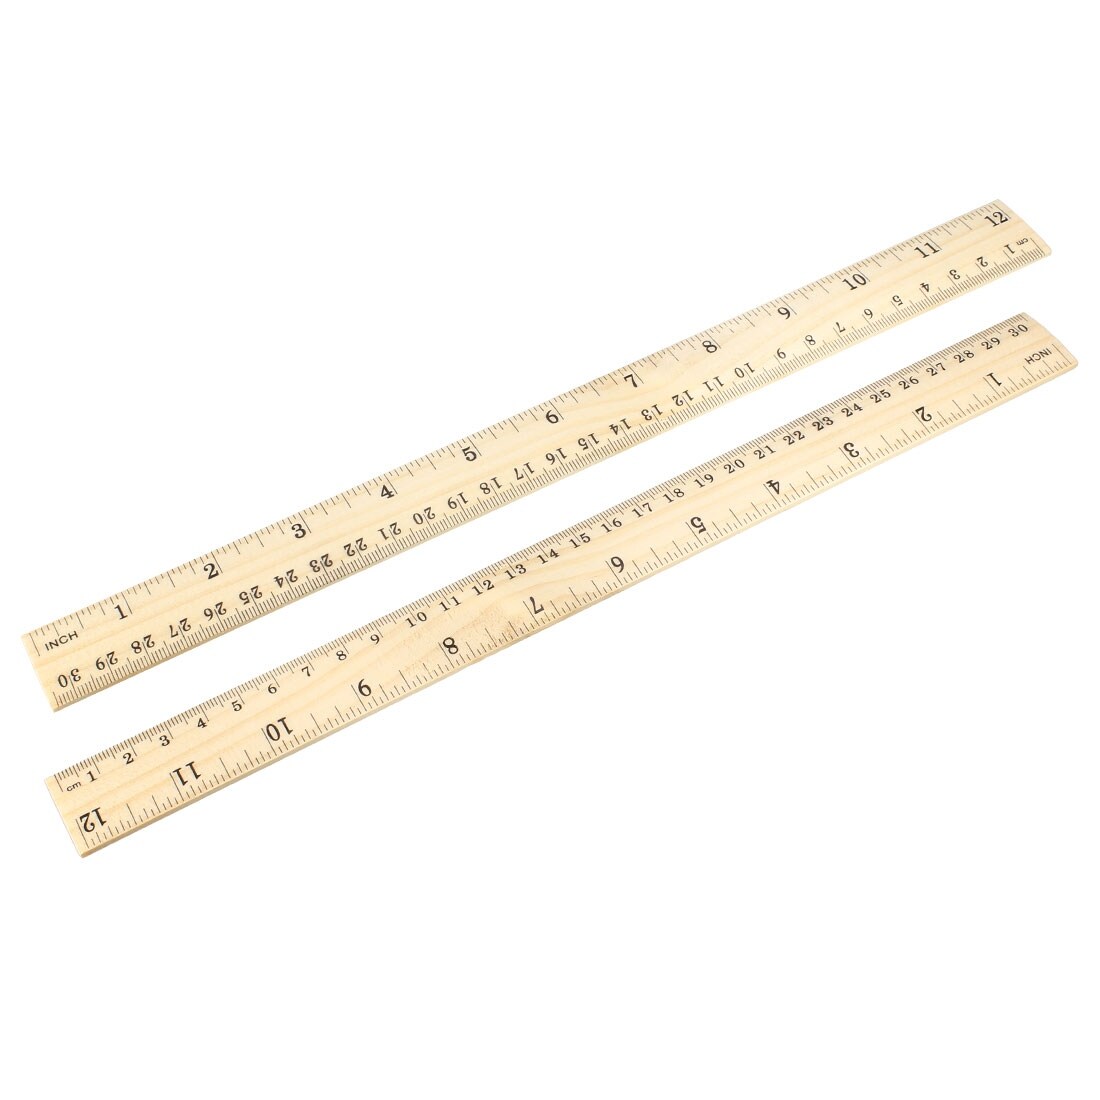 17 inch ruler